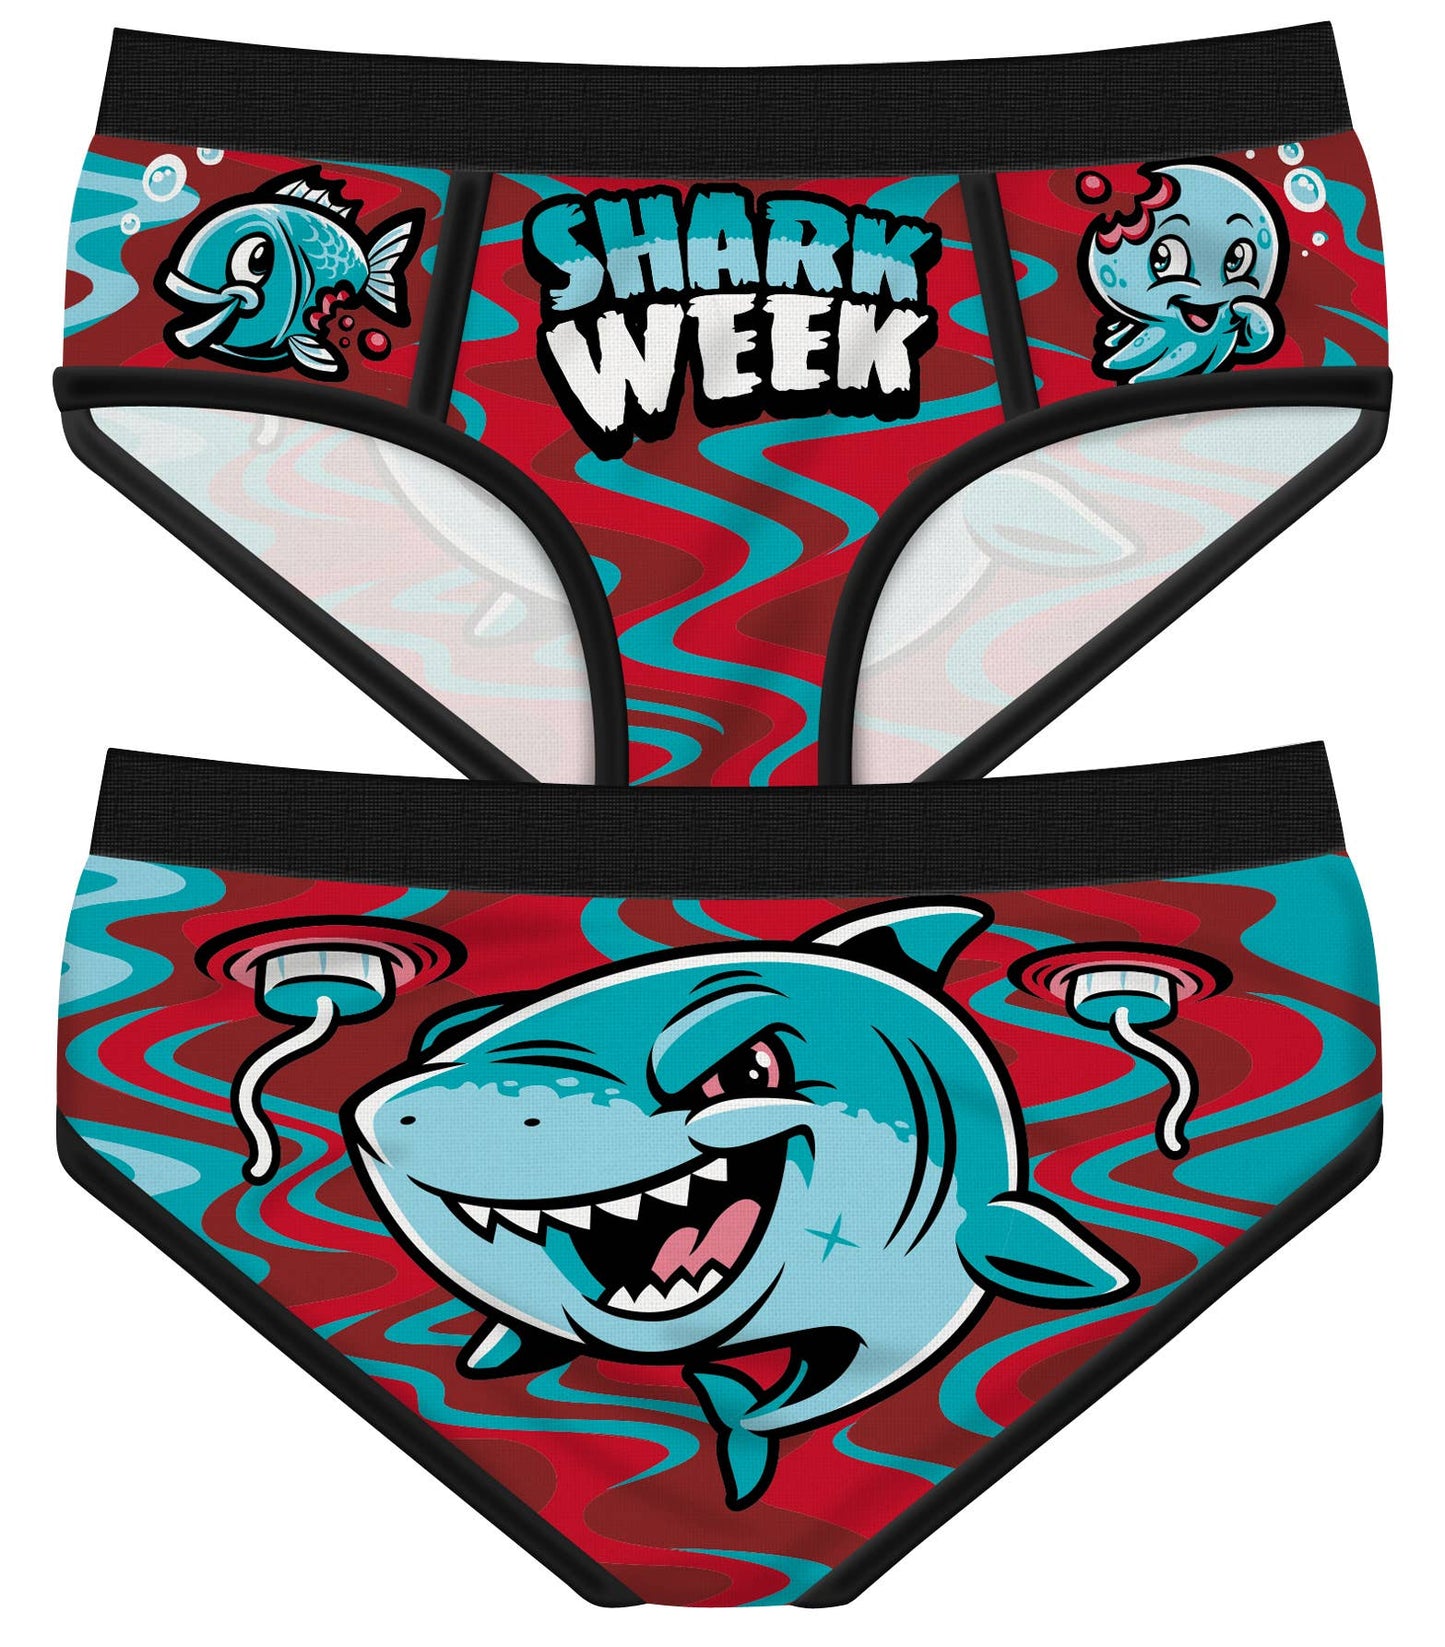 Harebrained! - Shark Week Panties - The Oddity Den